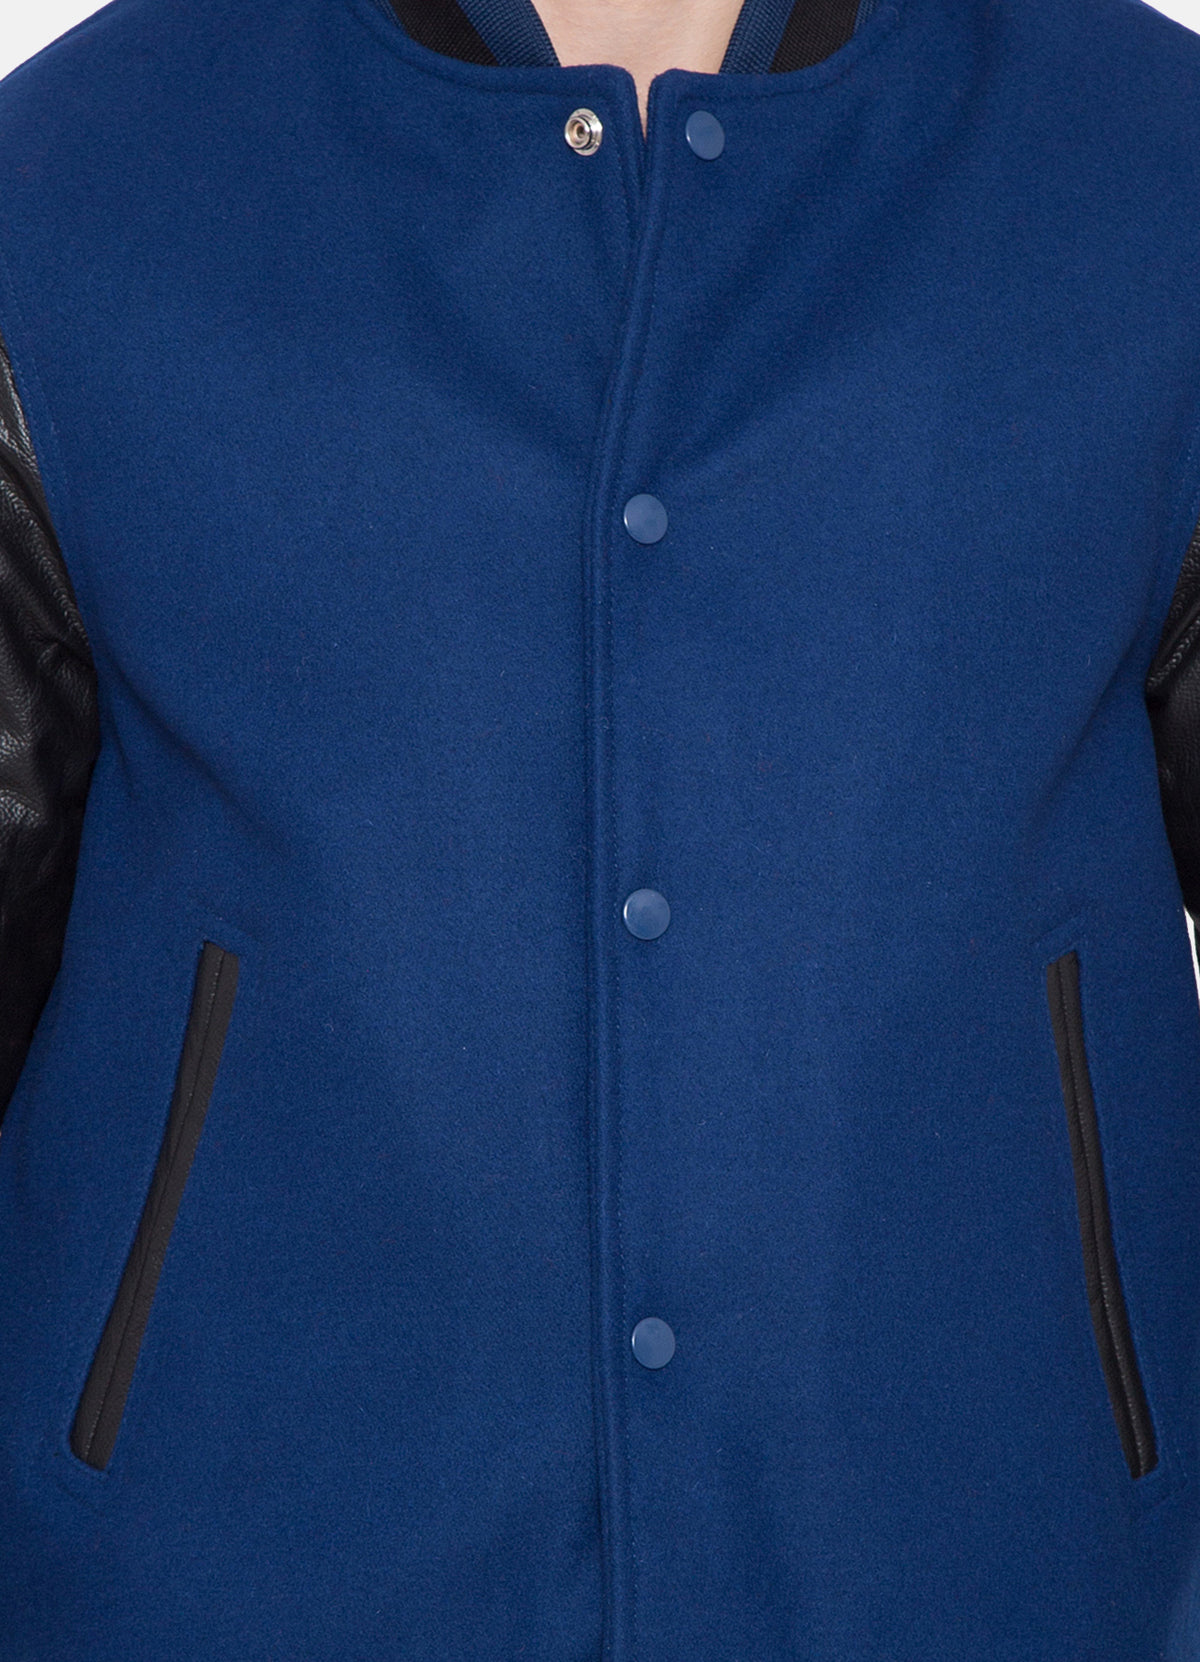 Mens Blue and Black Varsity Jacket | Elite Jacket